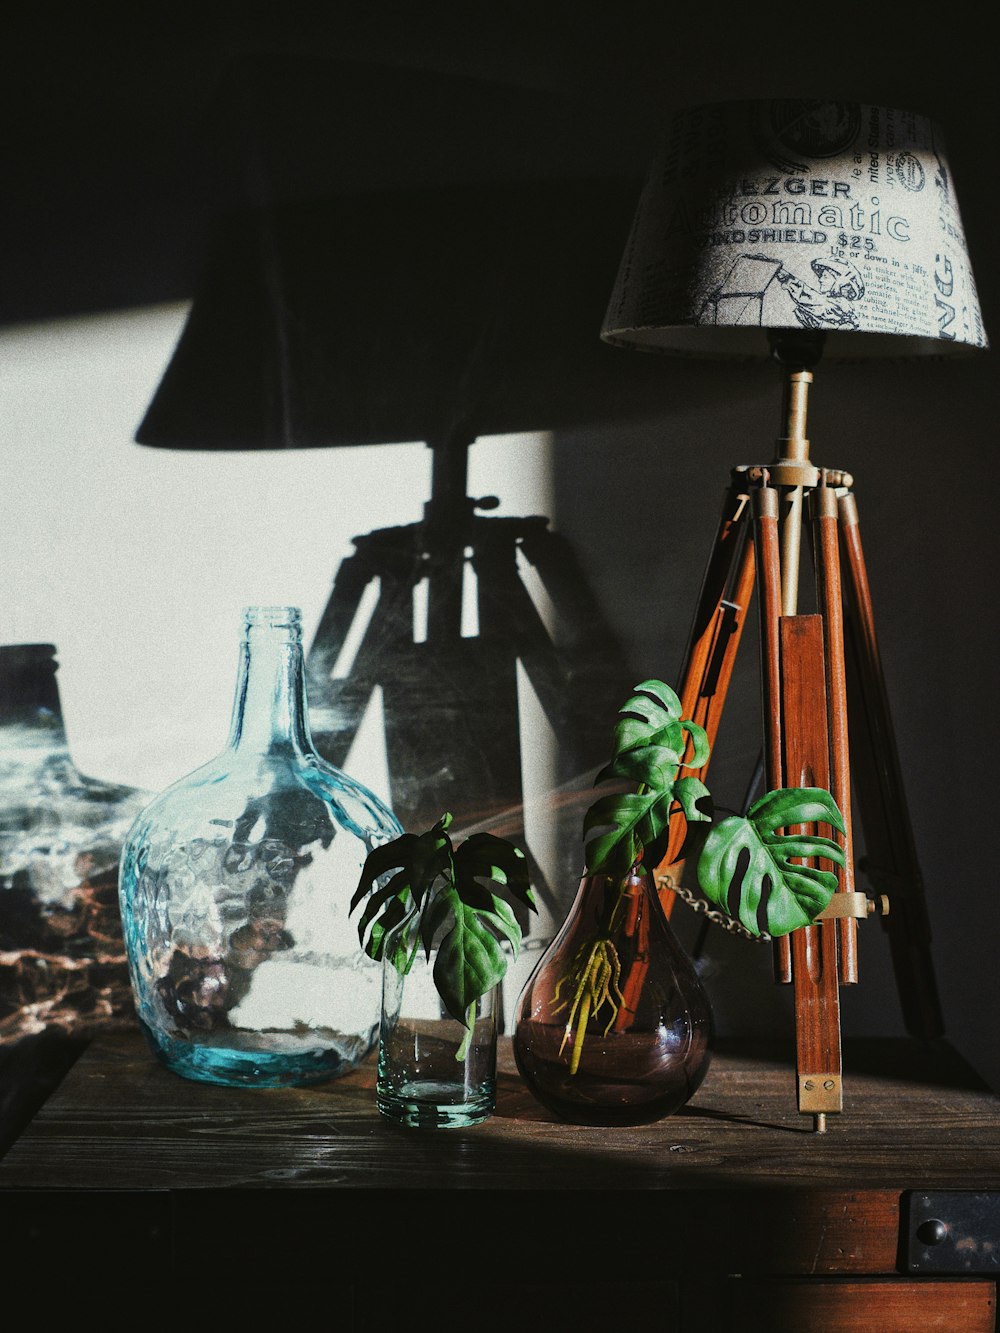 Fotografia de foco raso de plantas verdes em vaso